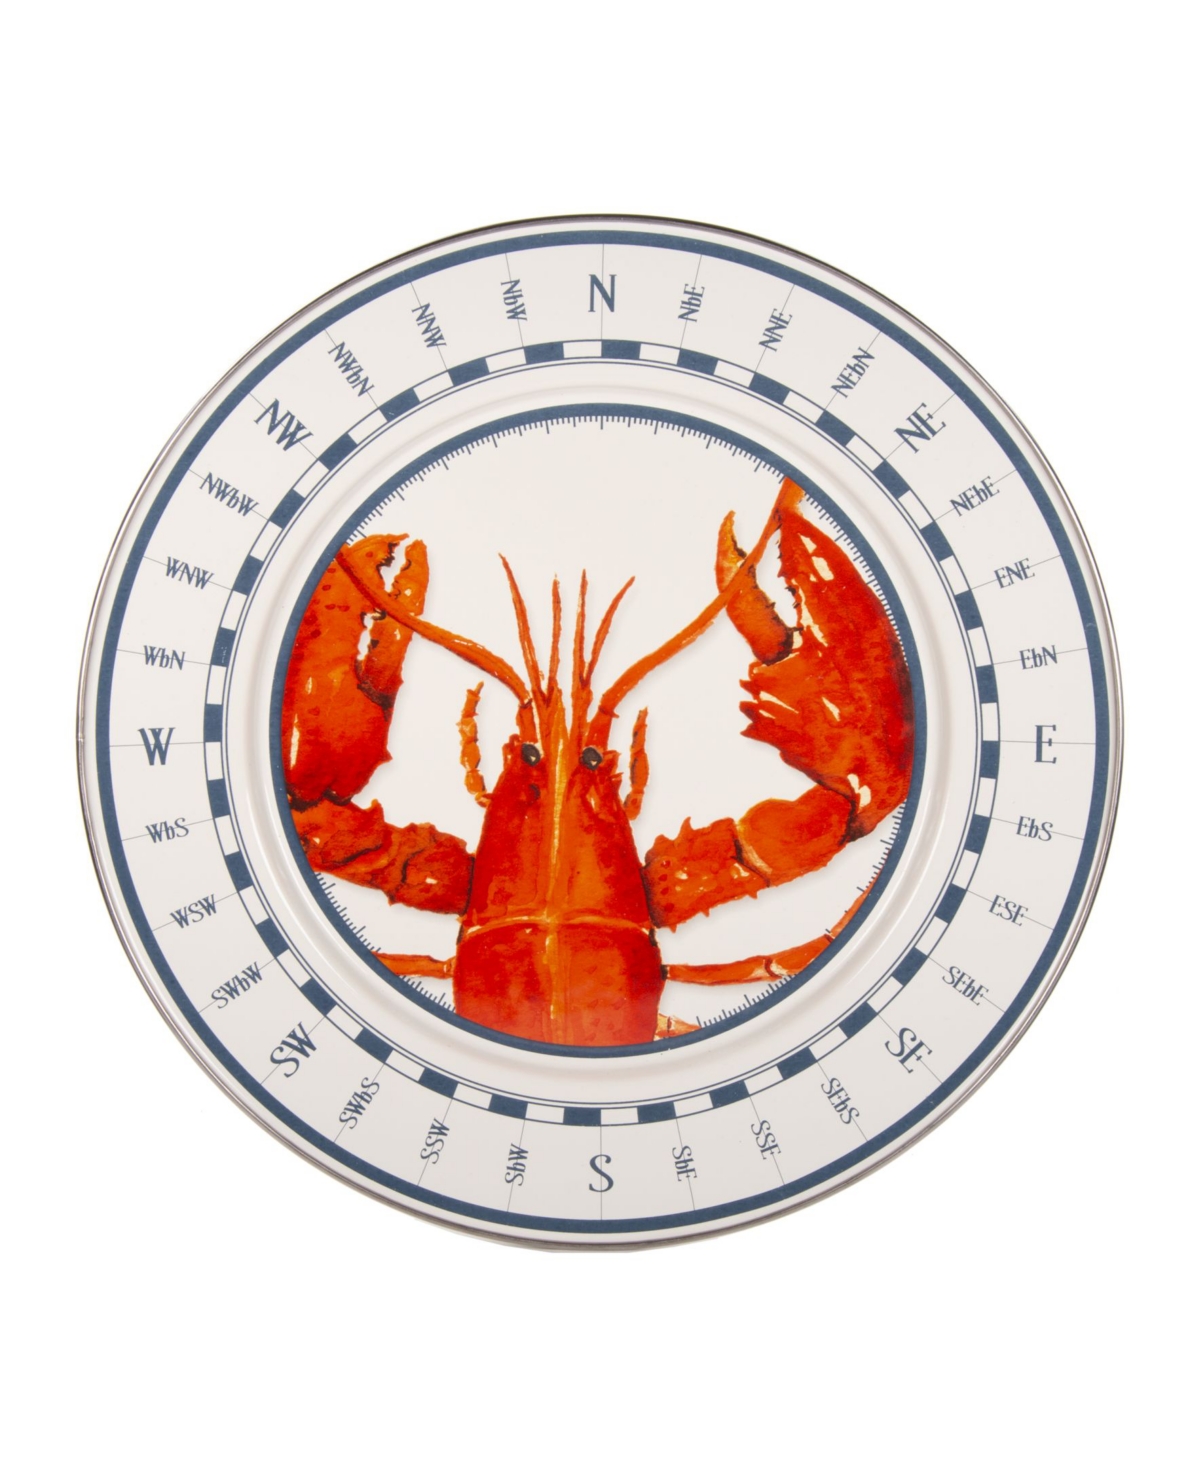 Lobster Enamelware Chargers, Set of 2 - Multi